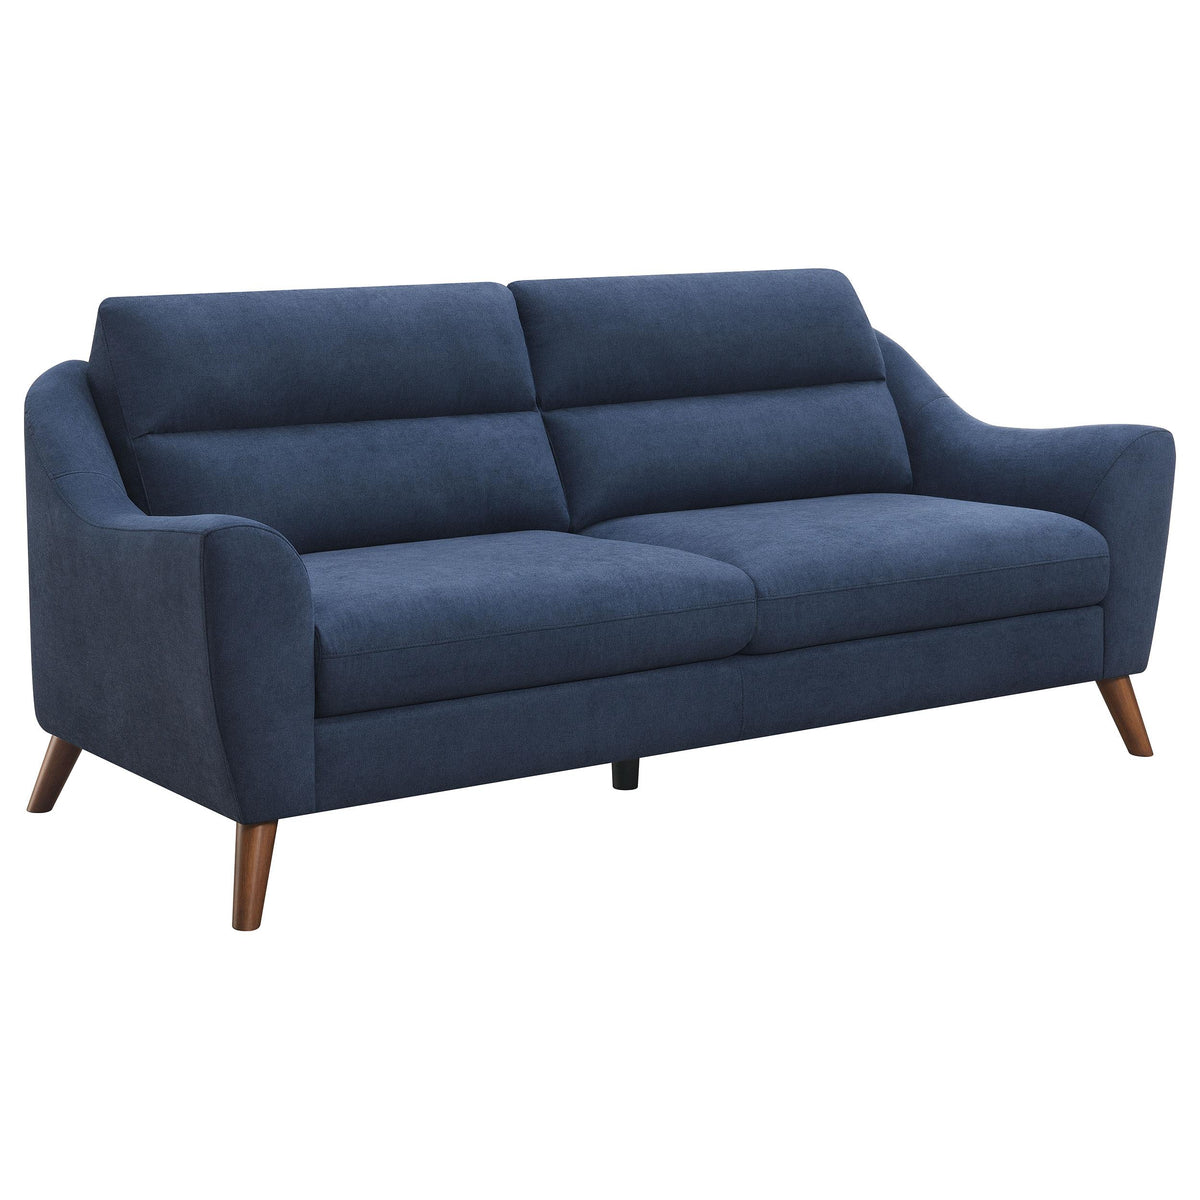 Gano Sloped Arm Upholstered Sofa Navy Blue  Las Vegas Furniture Stores